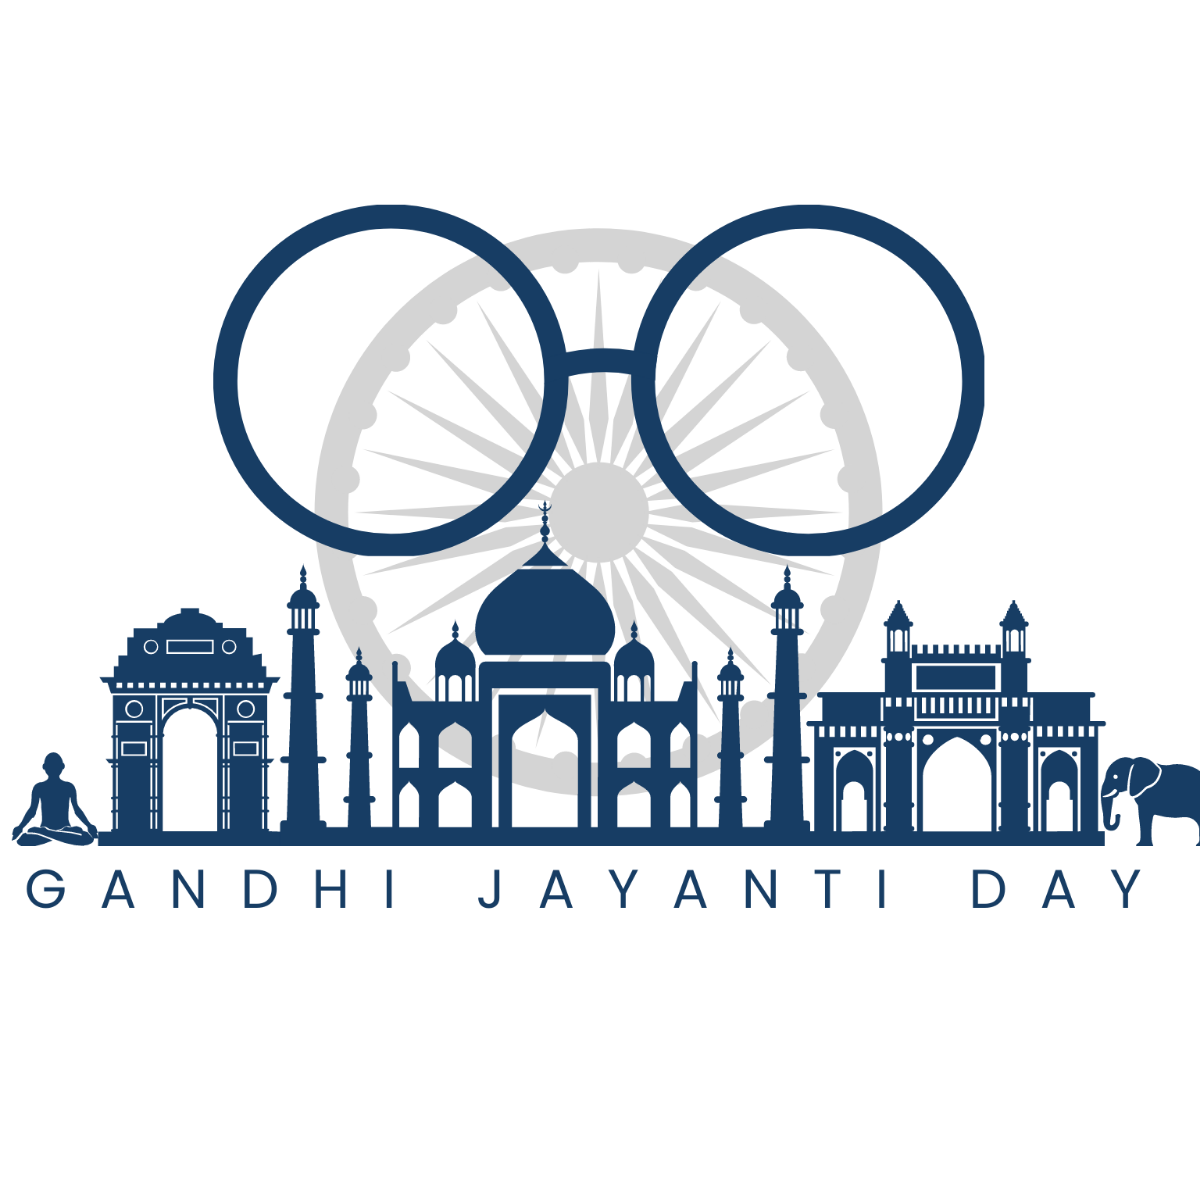 Gandhi Jayanti Day Vector